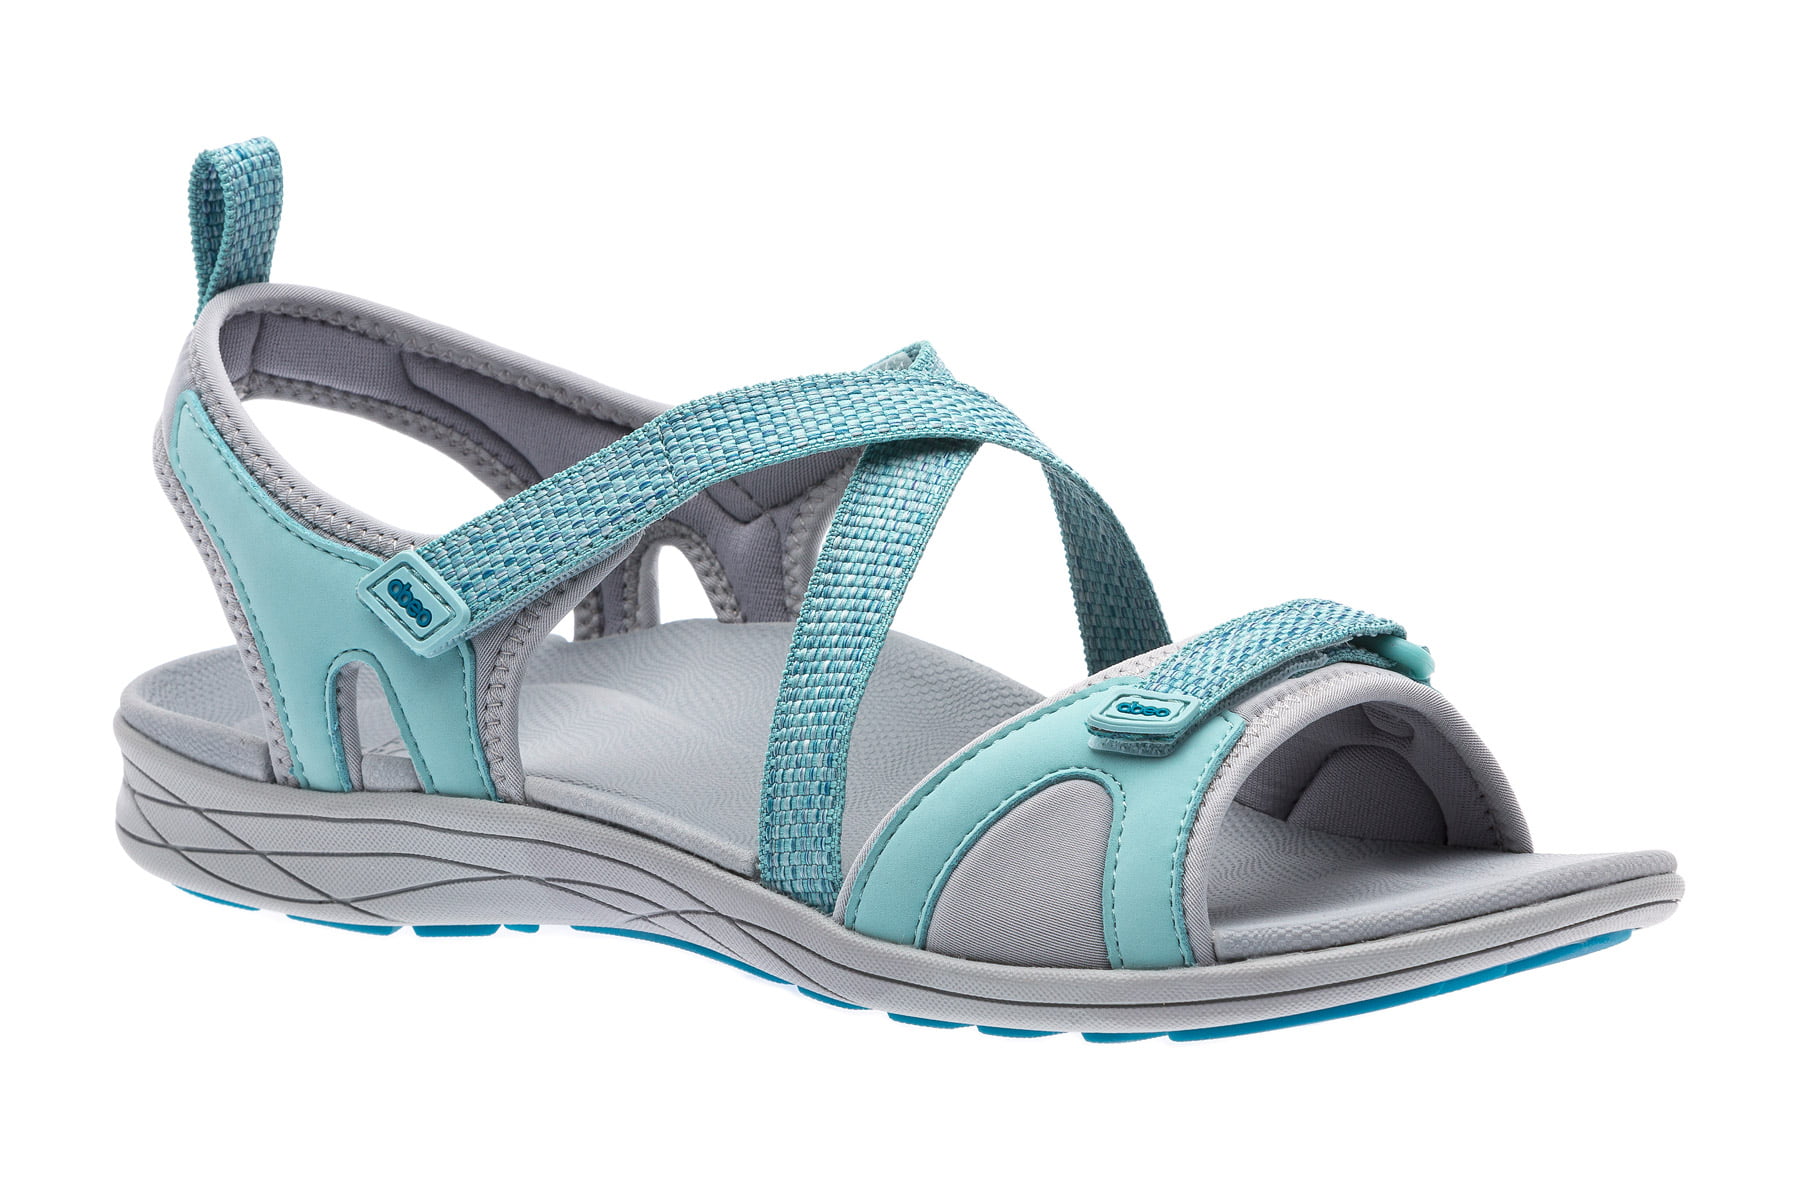 ABEO Footwear - ABEO Pearl Neutral - Low Heel Sandals - Walmart.com ...